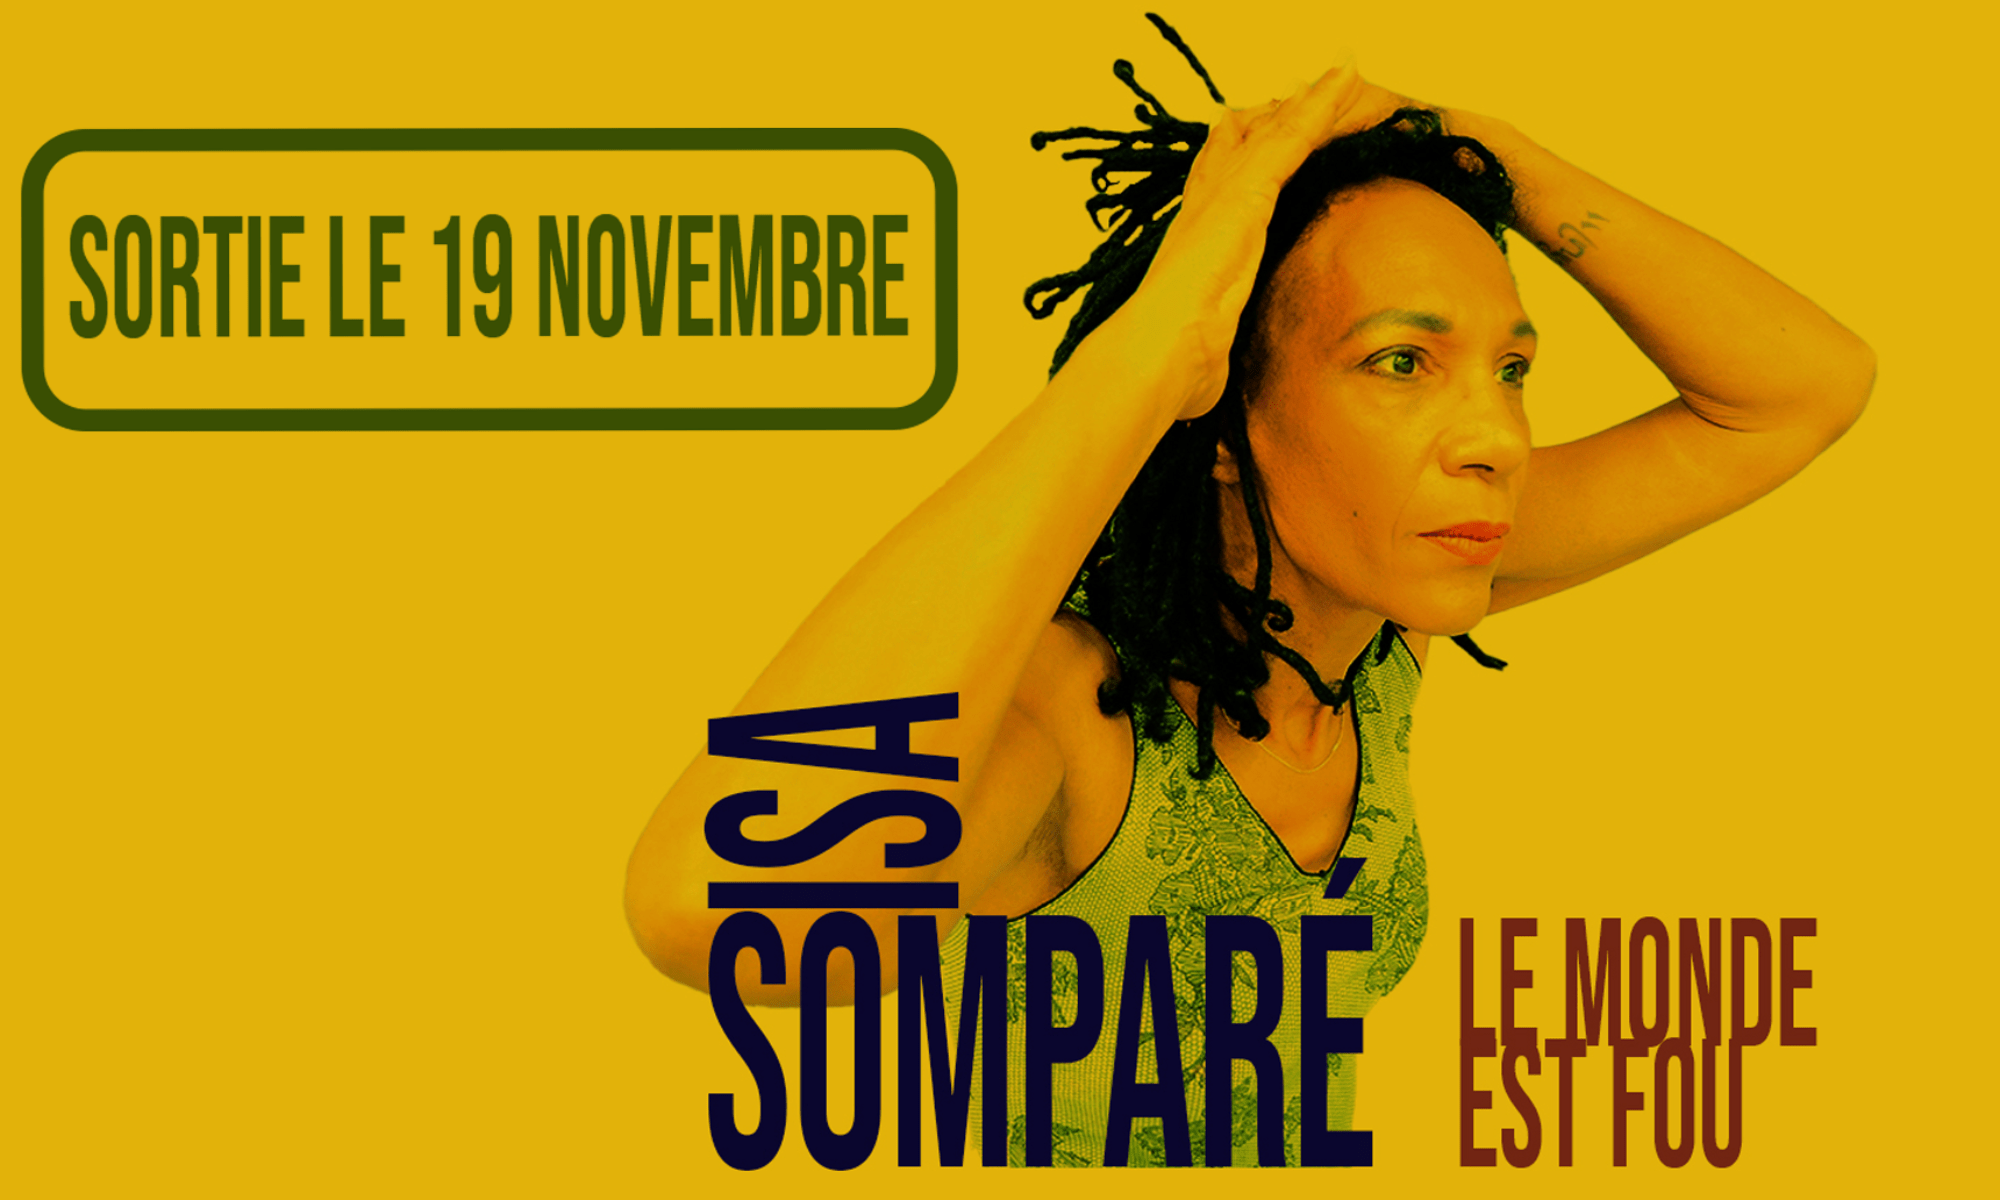 Isa Somparé's official website